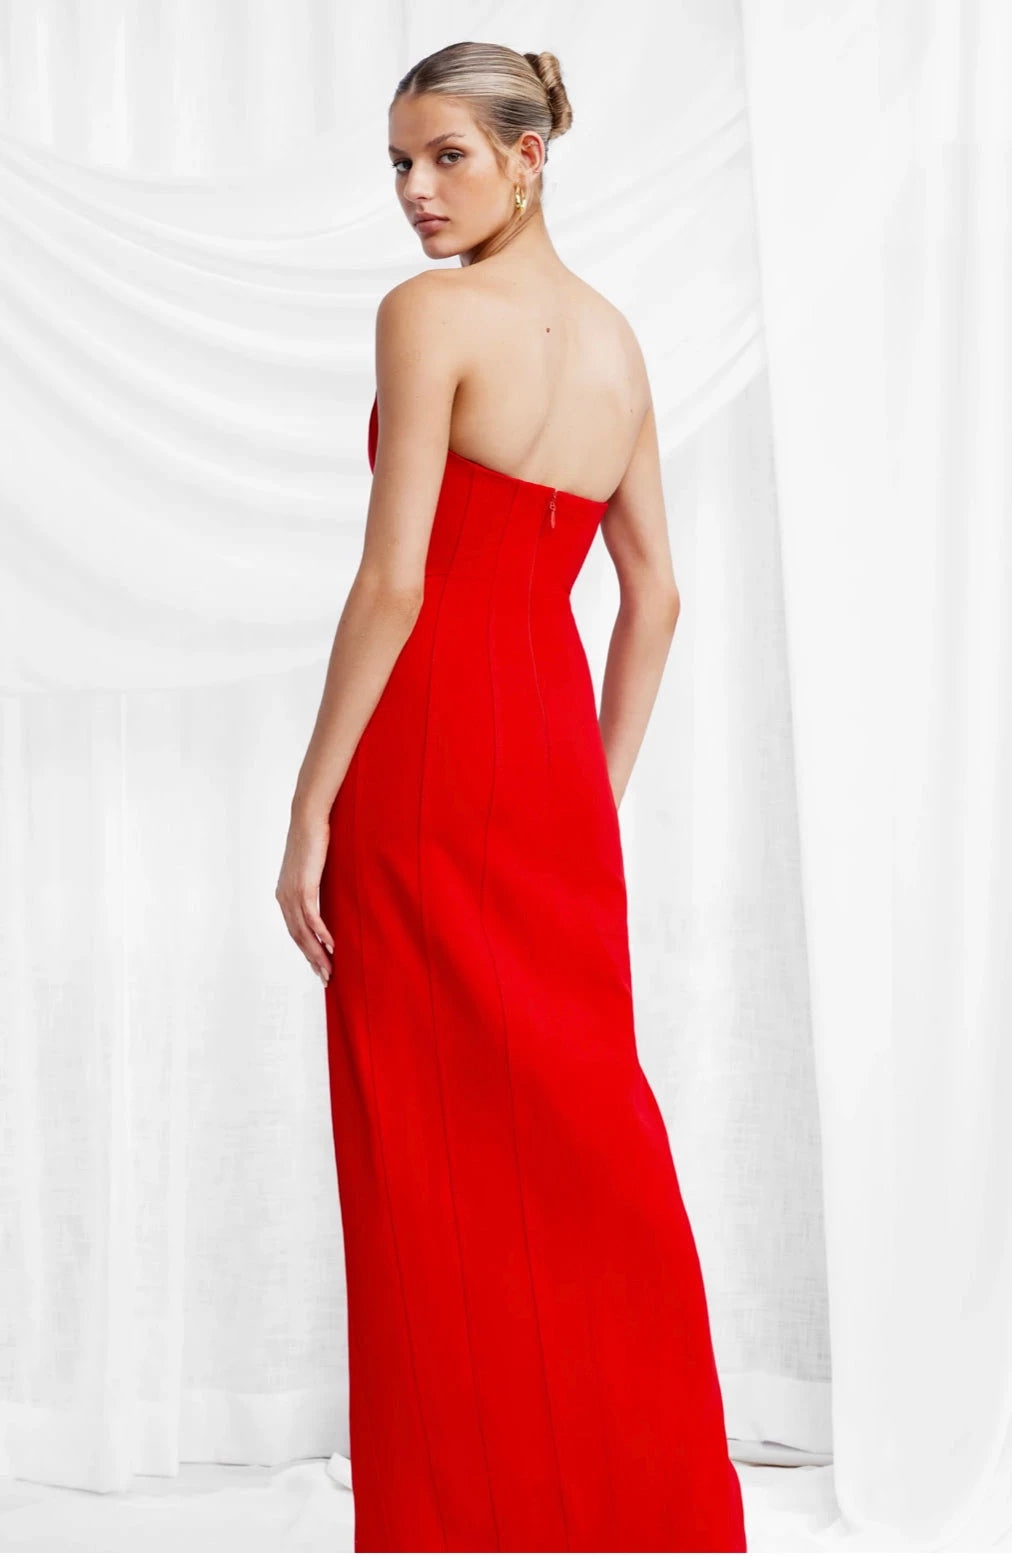 Lexi Leyla Red Dress Rear View